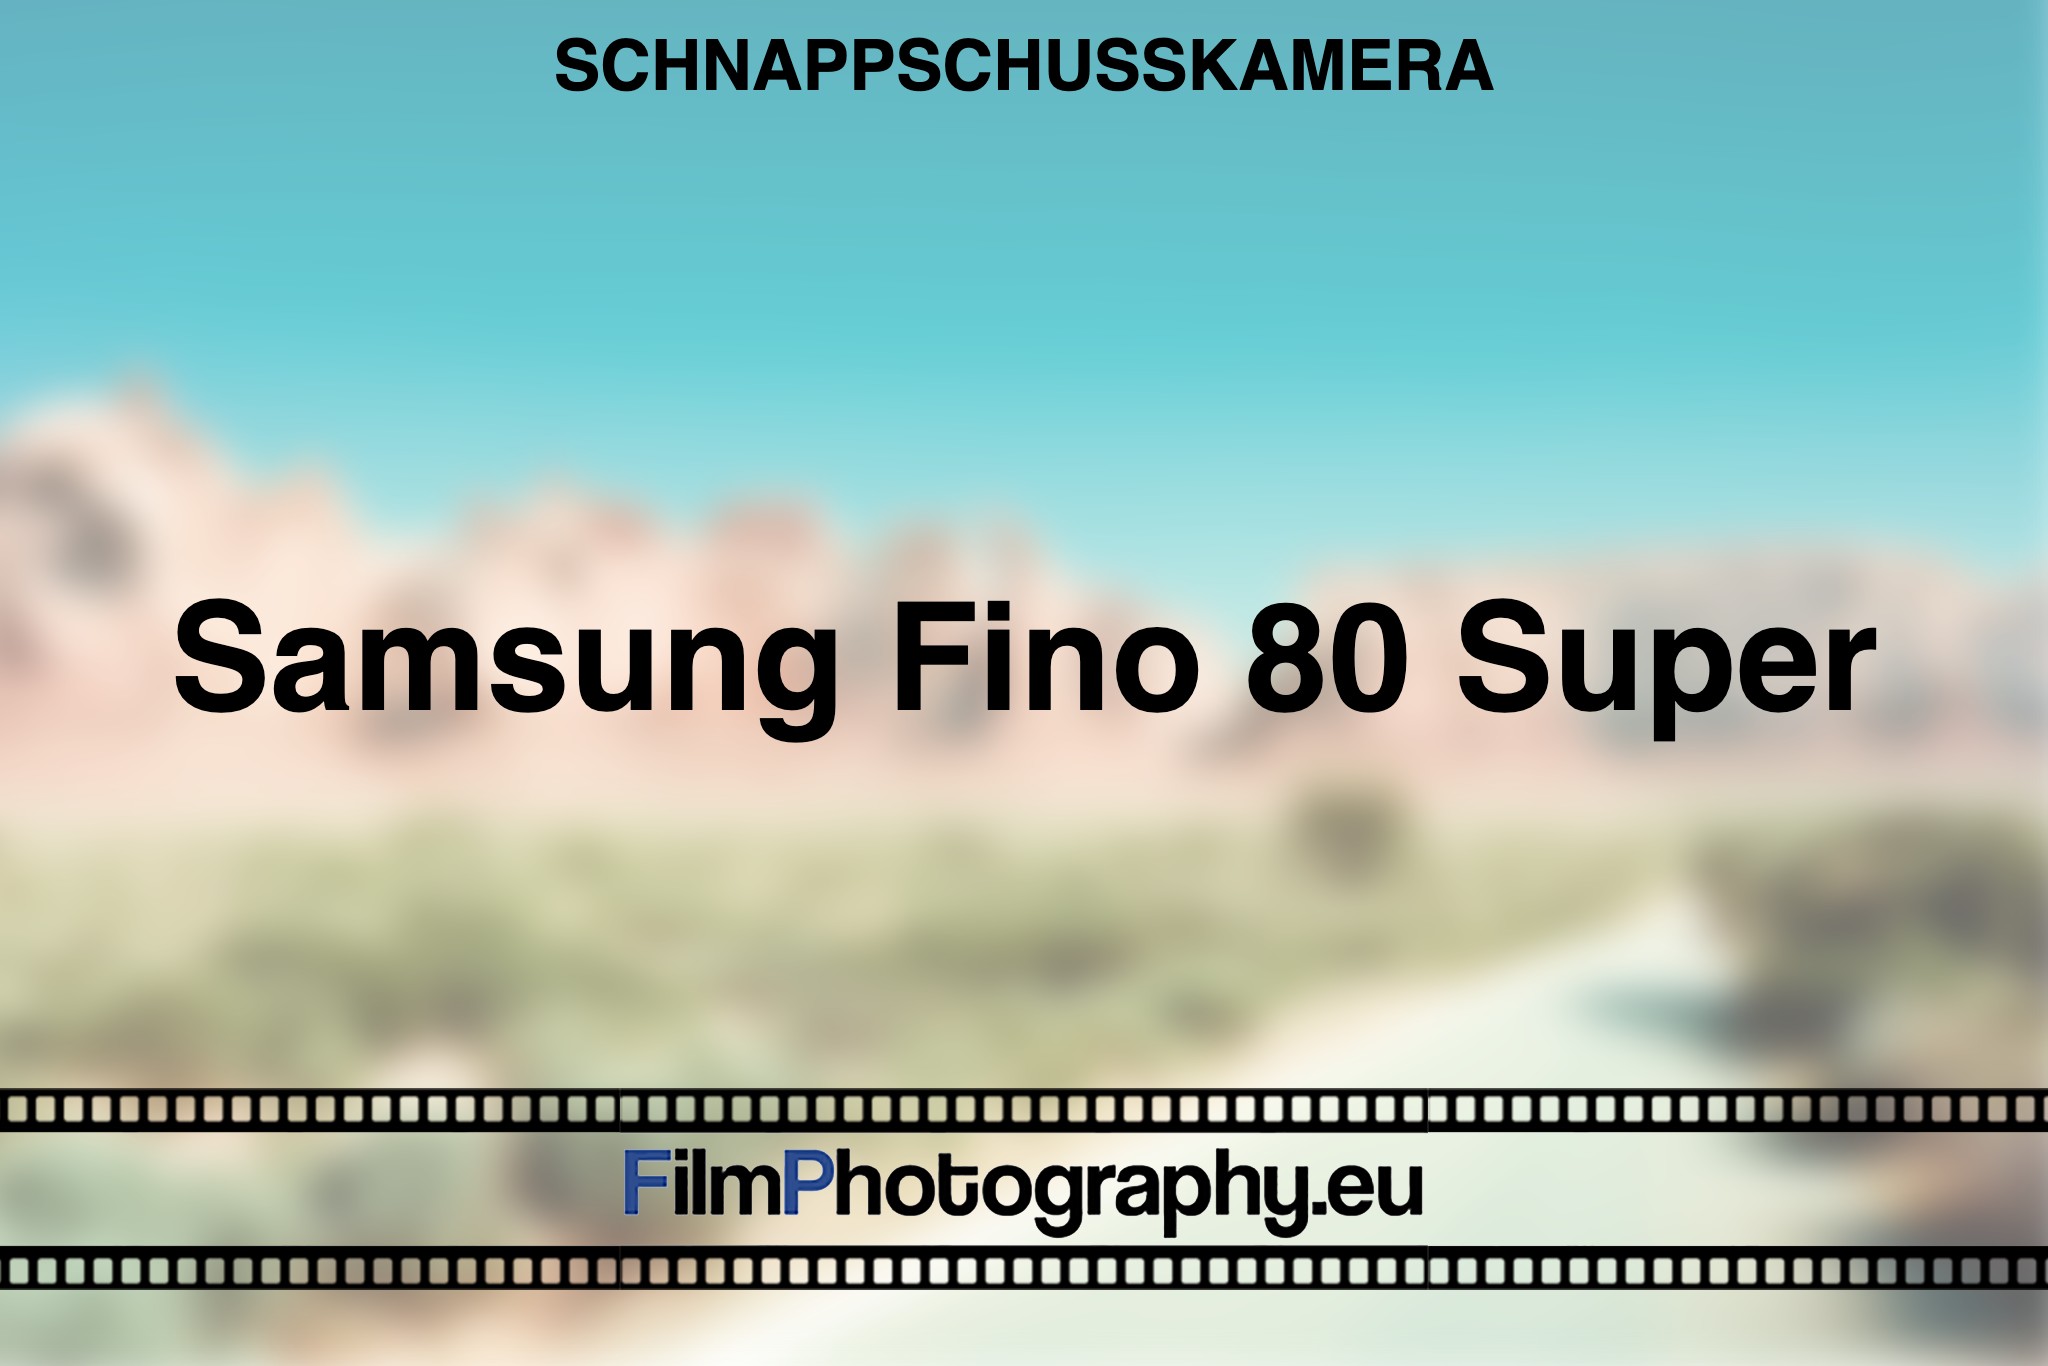 samsung-fino-80-super-schnappschusskamera-bnv